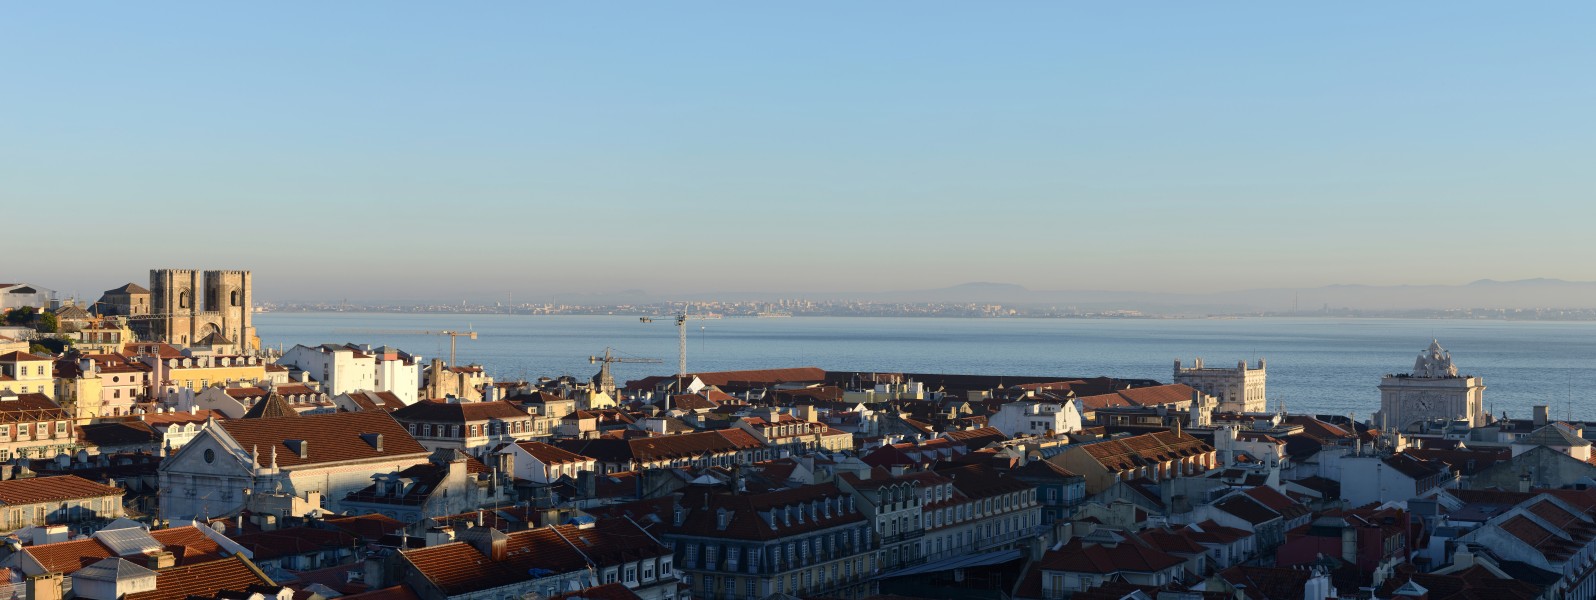 Lisboa January 2015-18a